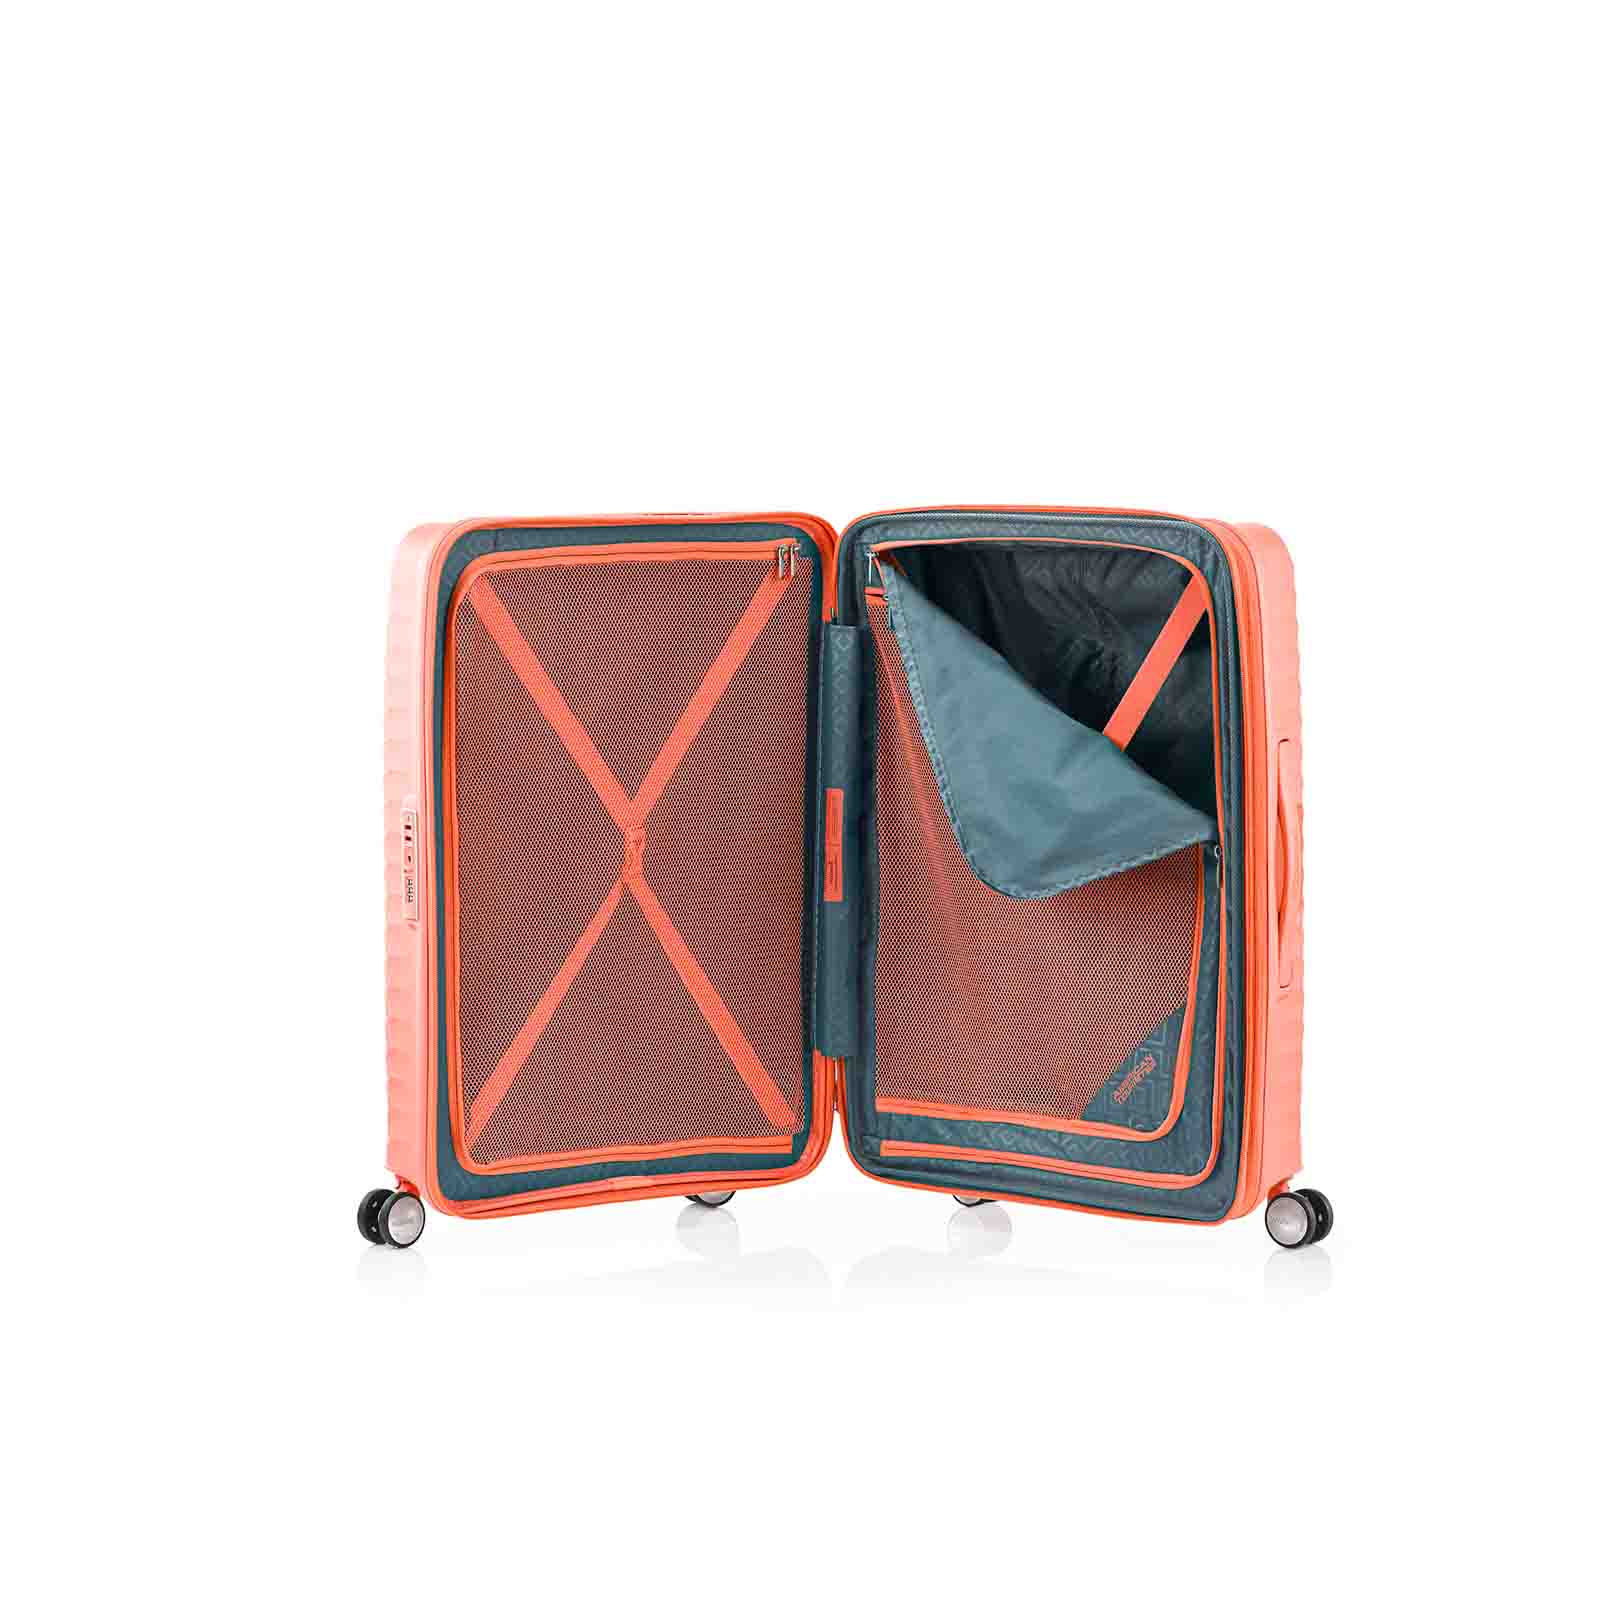 American-Tourister-Squasem-66cm-Suitcase-Bright-Coral-Open